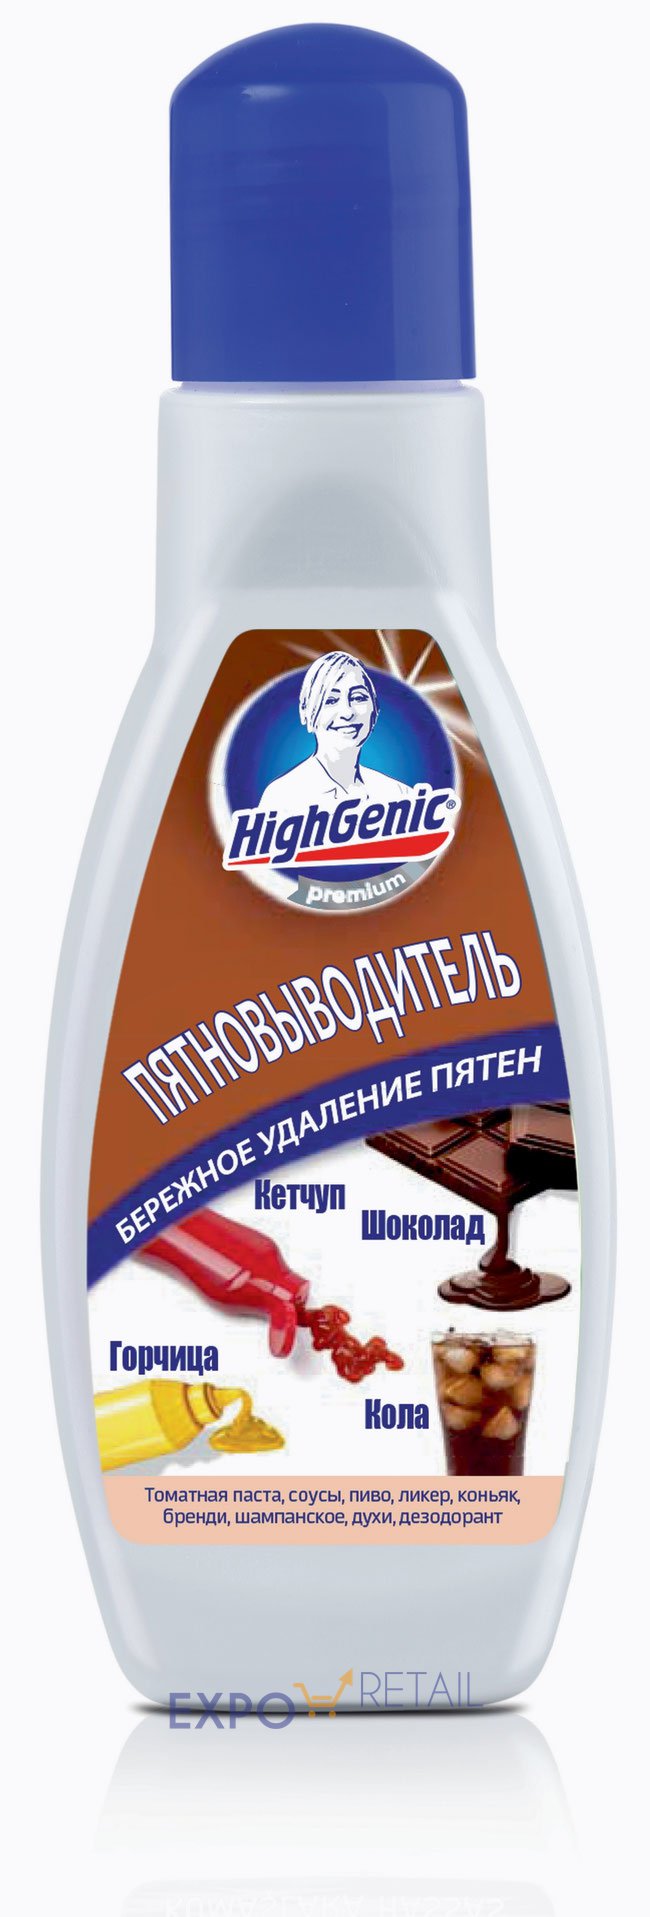 HighGenic Premium Пятновыводитель: кетчуп, горчица, шоколад, кола